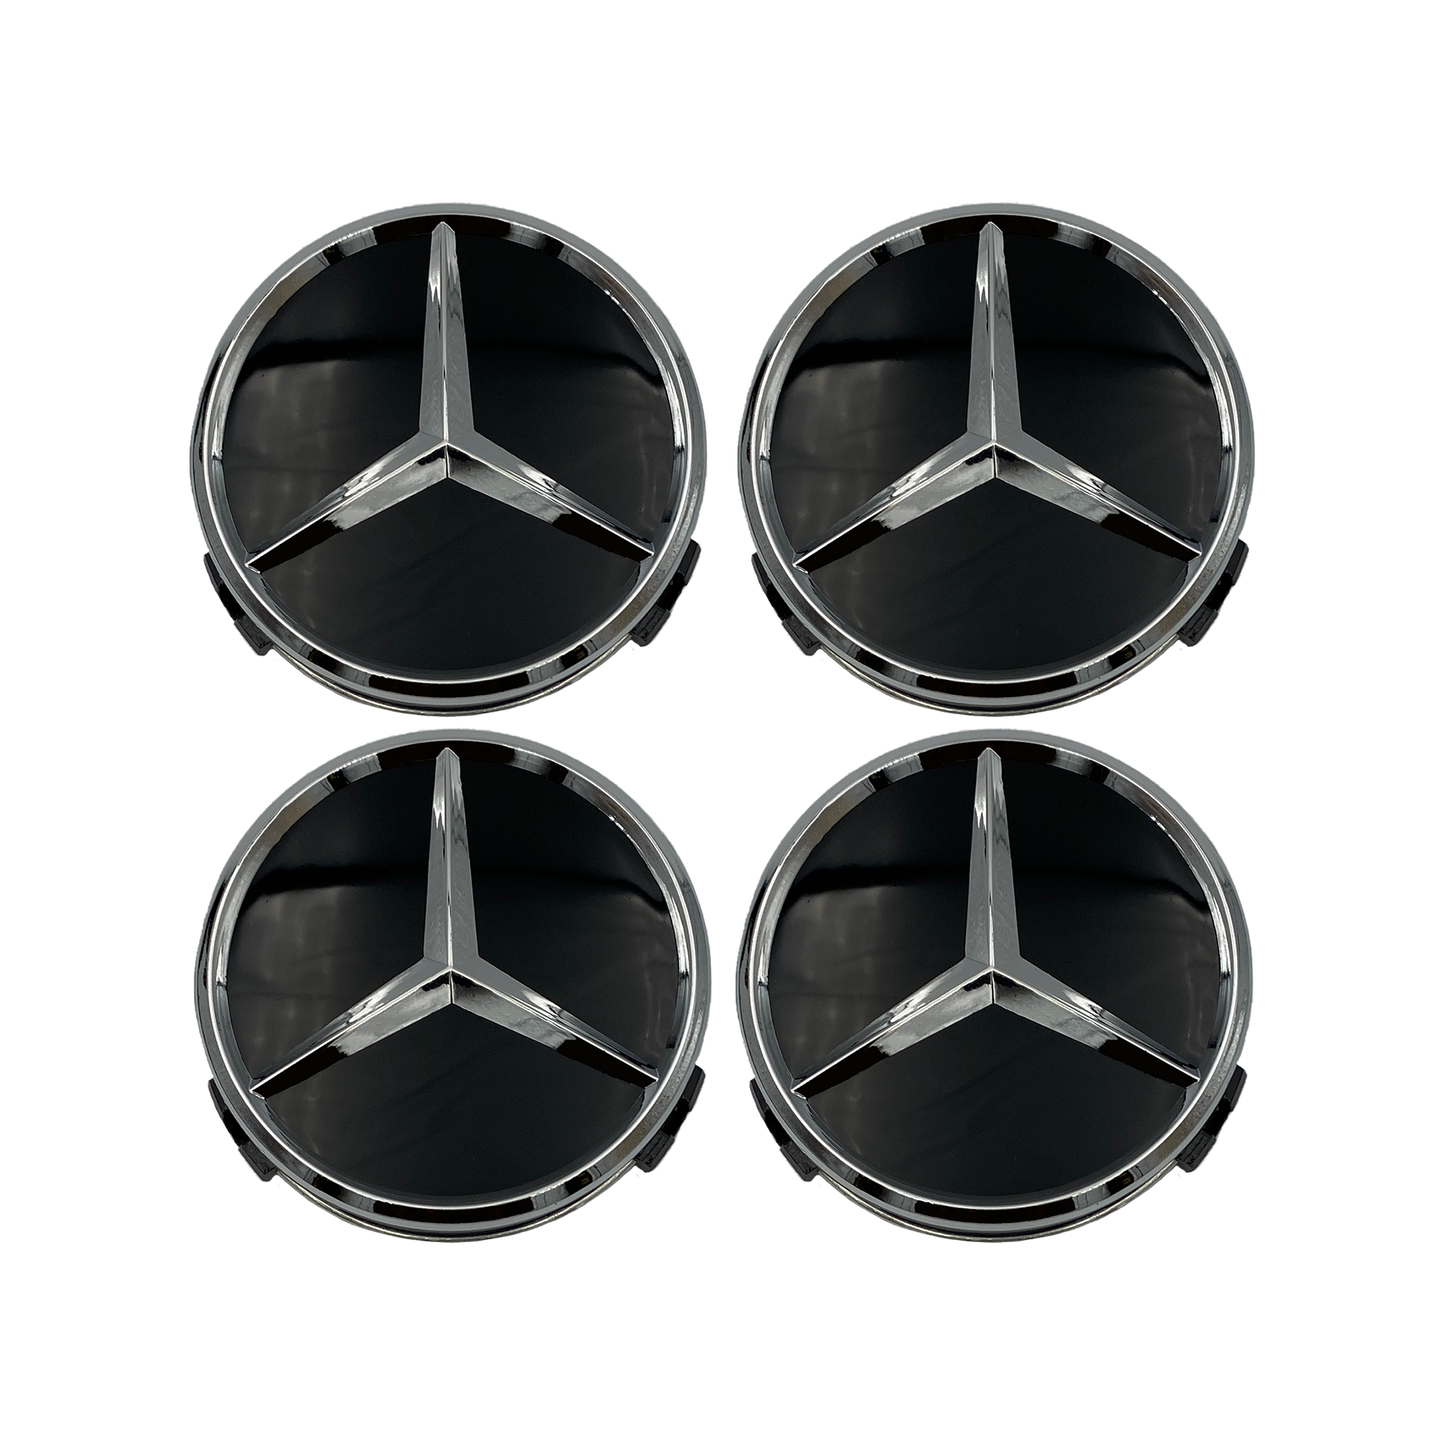 4 pieces. Black Mercedes Center caps